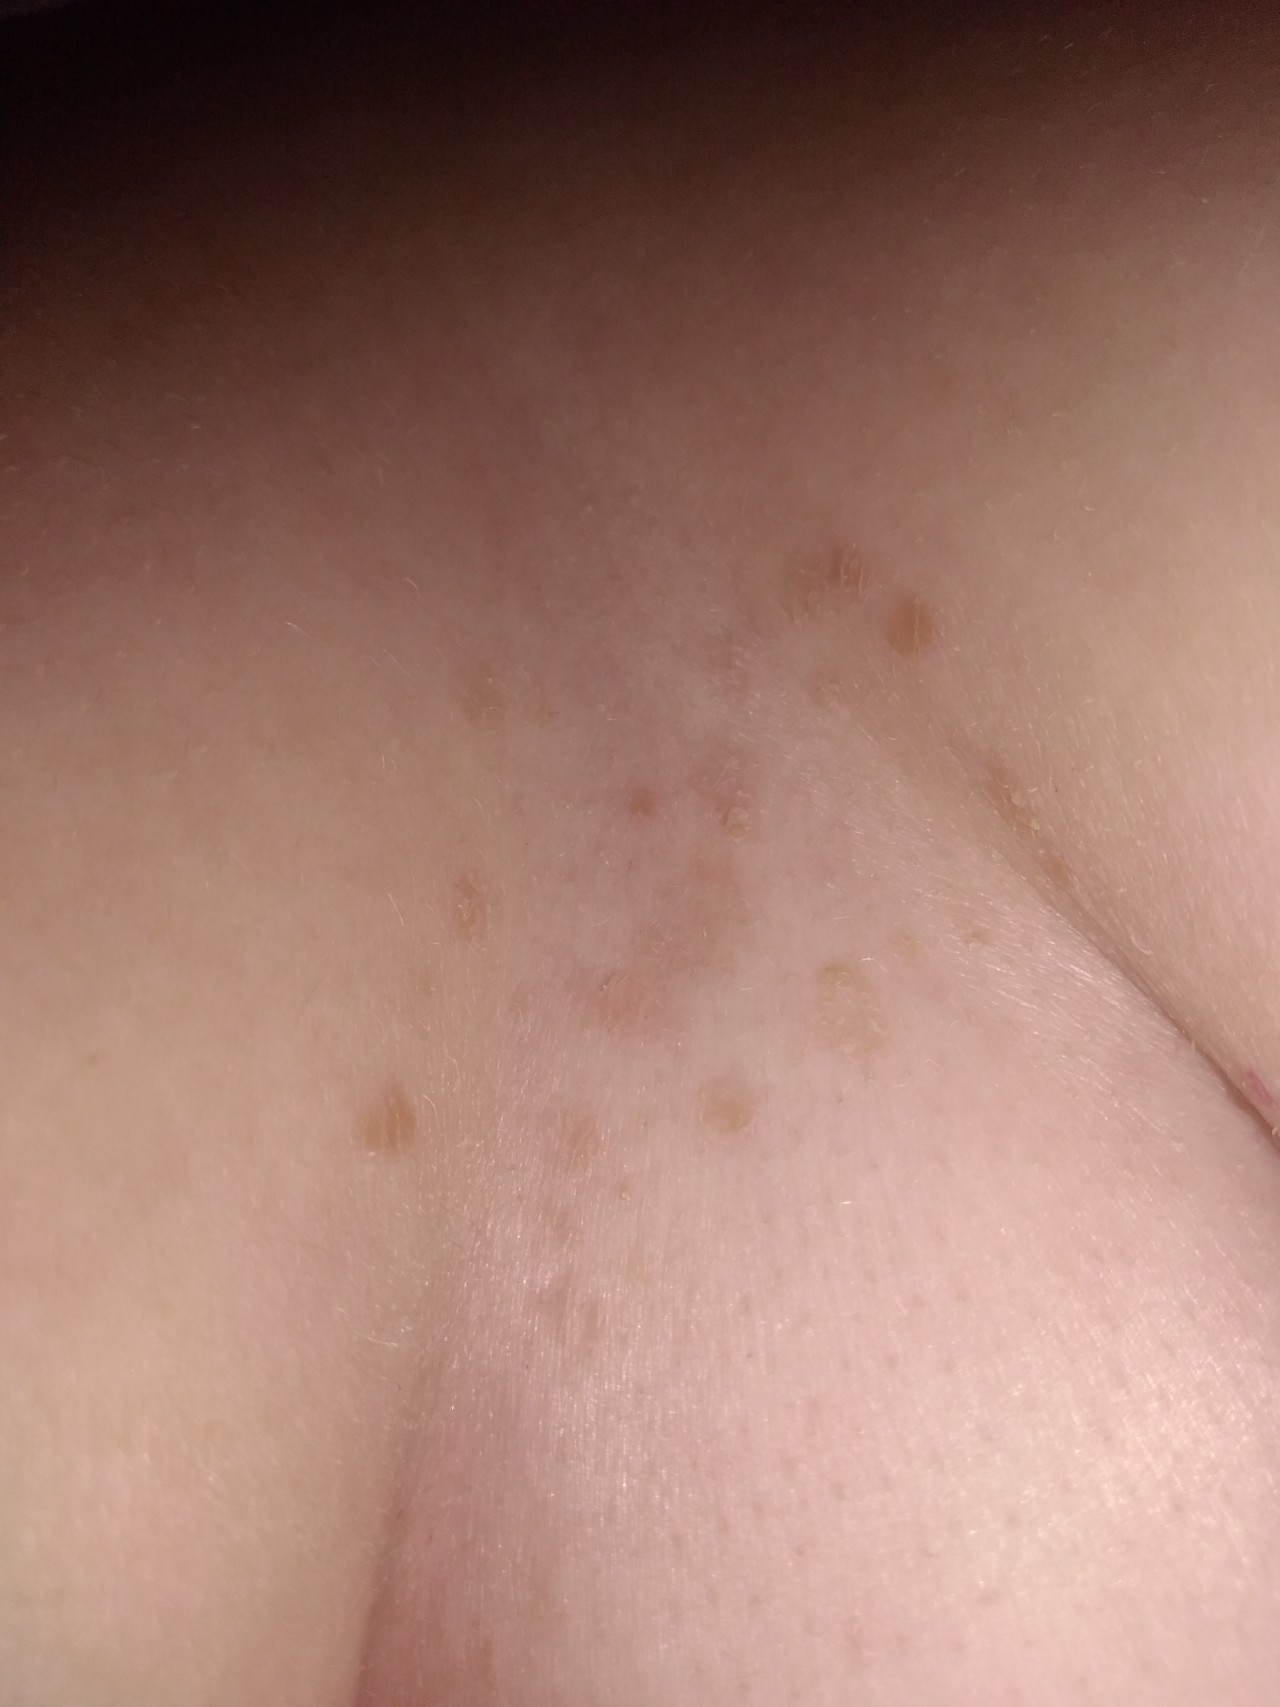 светло коричневые пятна на груди у женщин фото 18